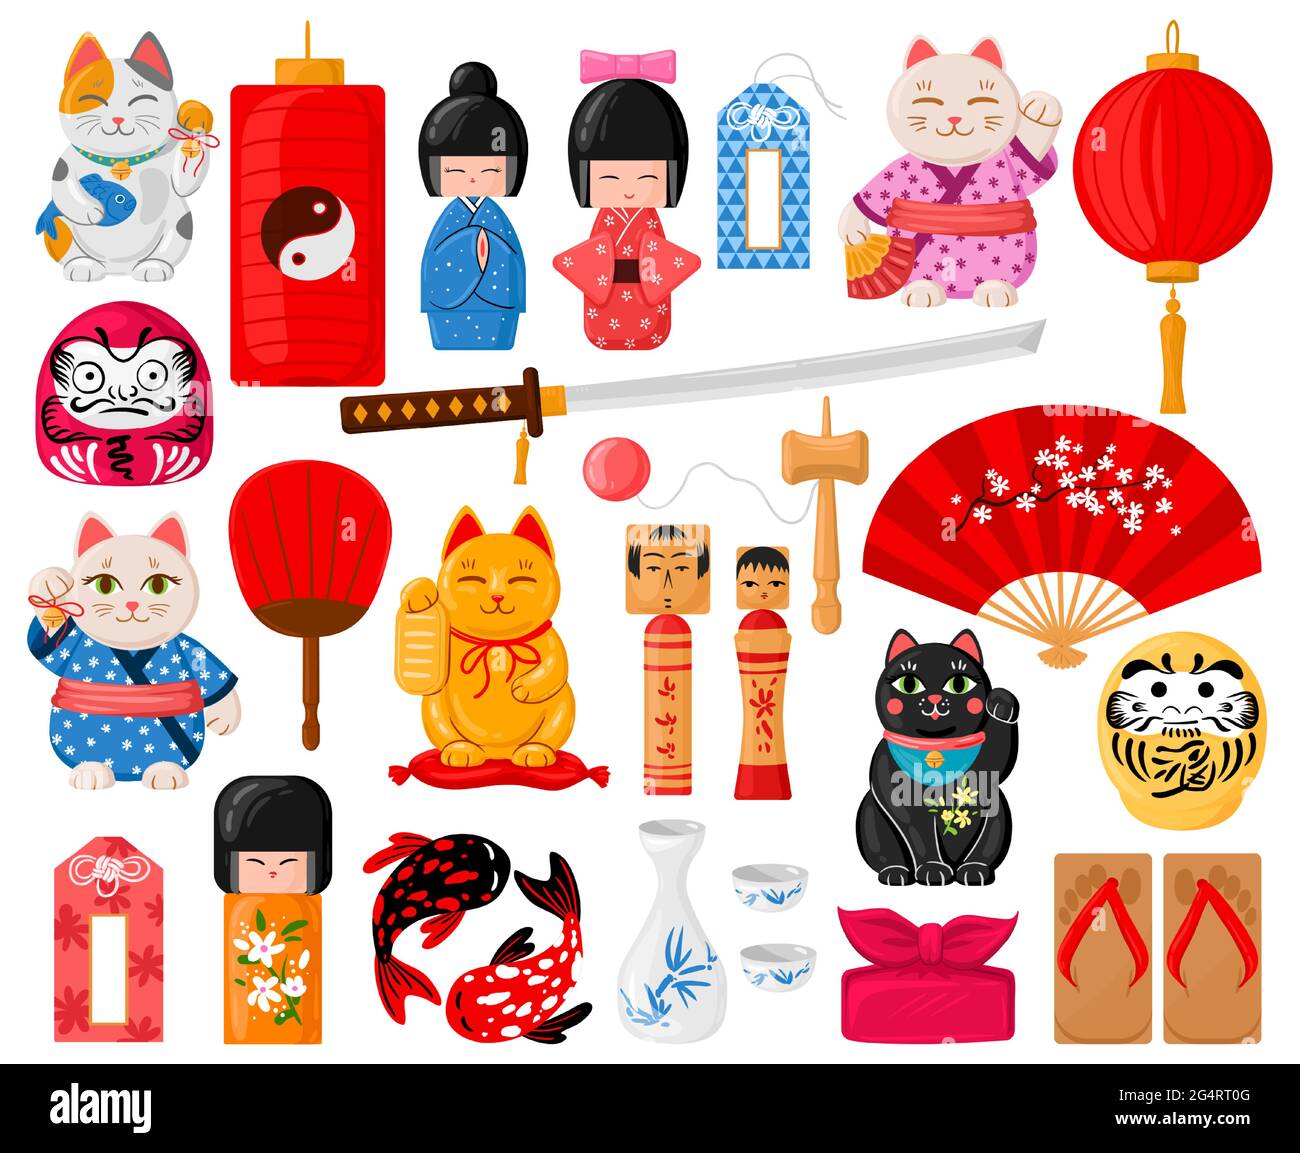 Cartoon japanische Symbole. Orientalisches traditionelles Spielzeug, maneki neko, omamori, daruma und kokeshi Puppen Vektor-Illustration-Set. Nette japanische Kultur Stock Vektor